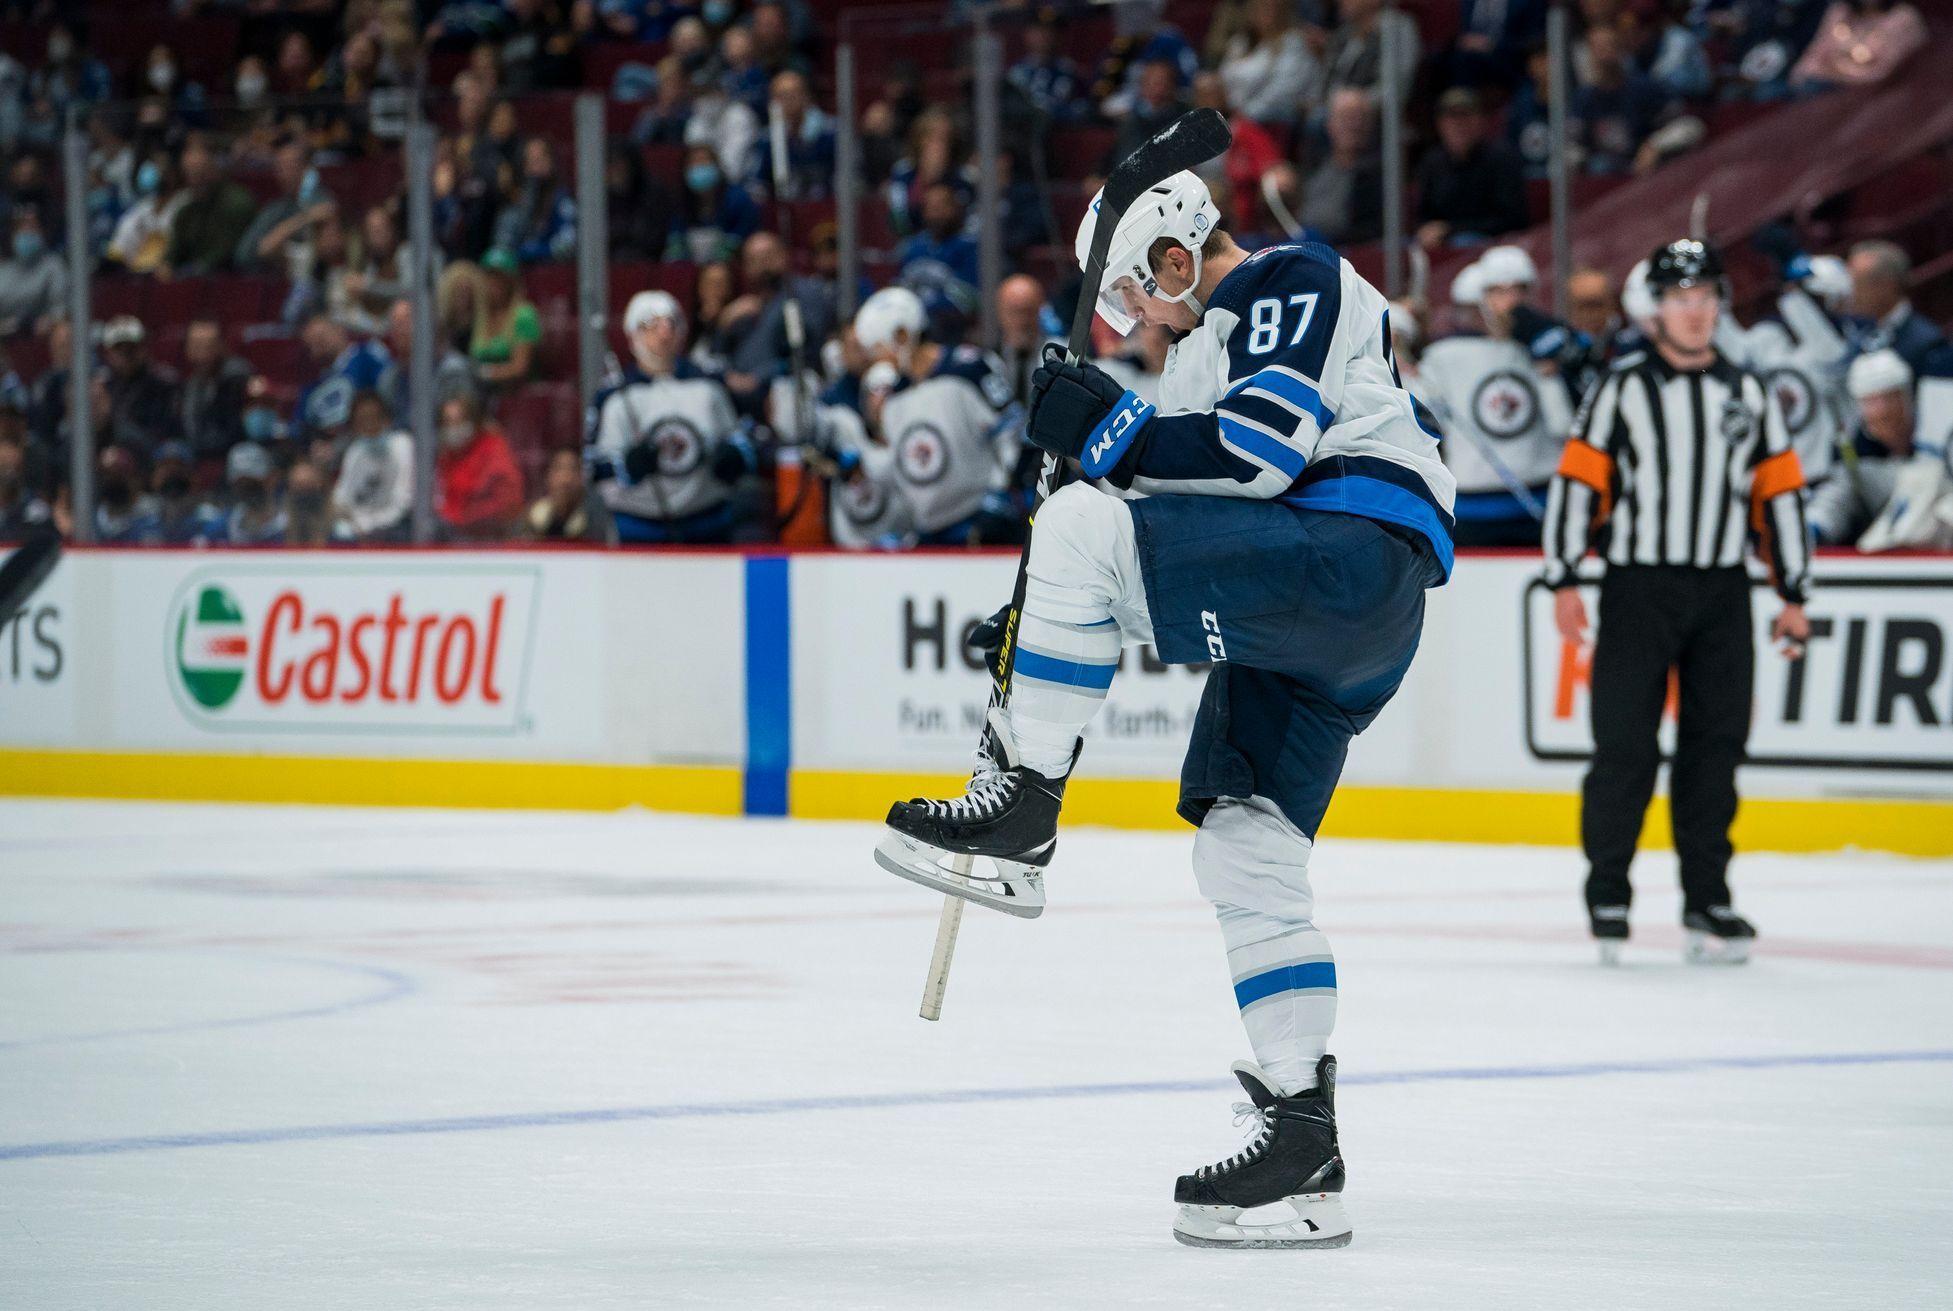 hokej, NHL: Preseason-Winnipeg Jets at Vancouver Canucks, Kristian Reichel